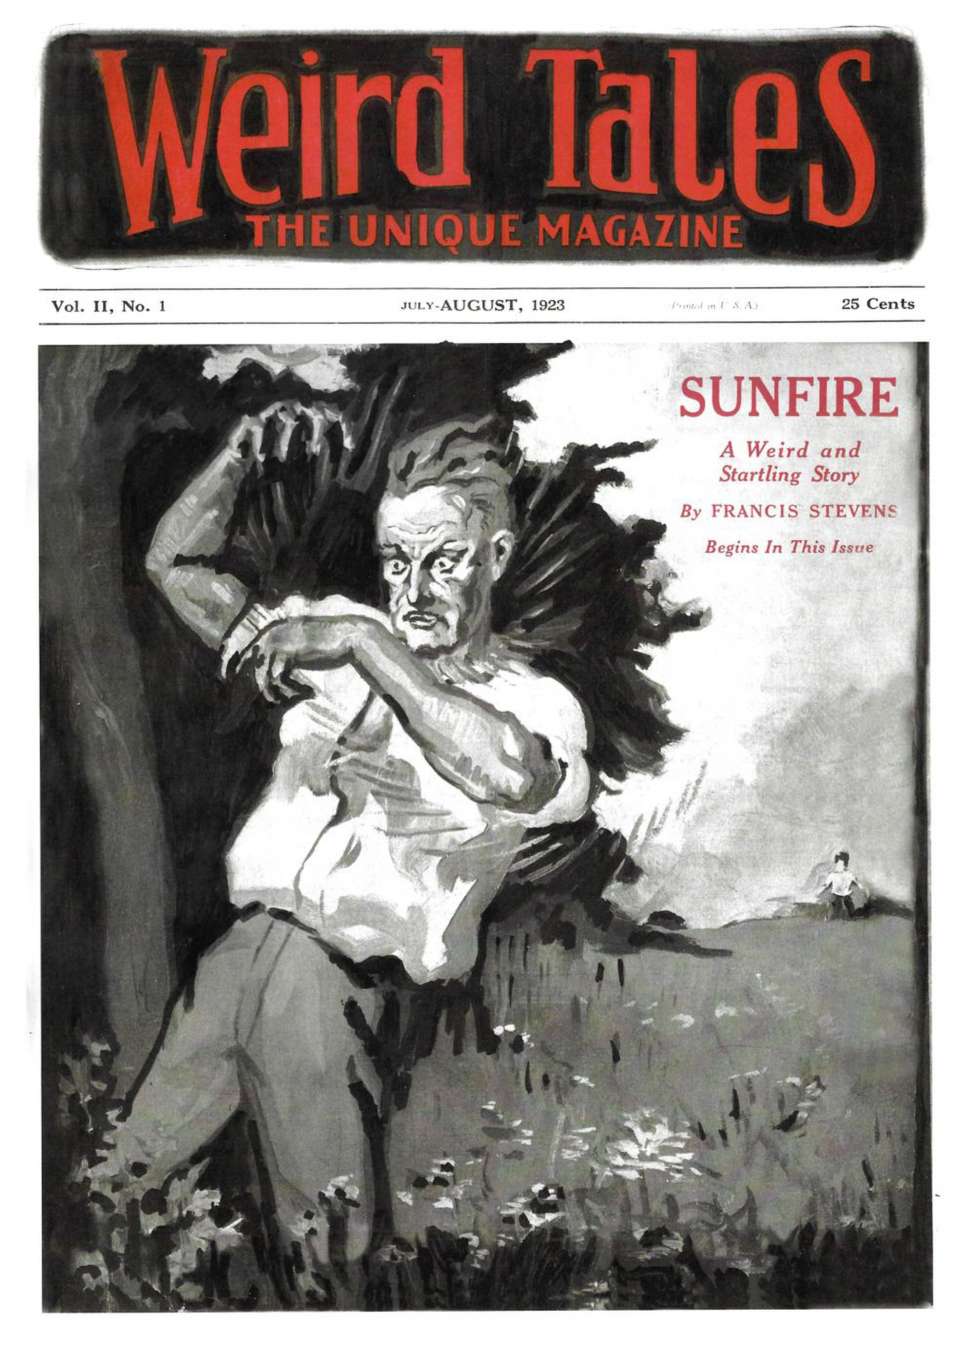 Book Cover For Weird Tales v2 1 - Sunfire - Francis Stevens